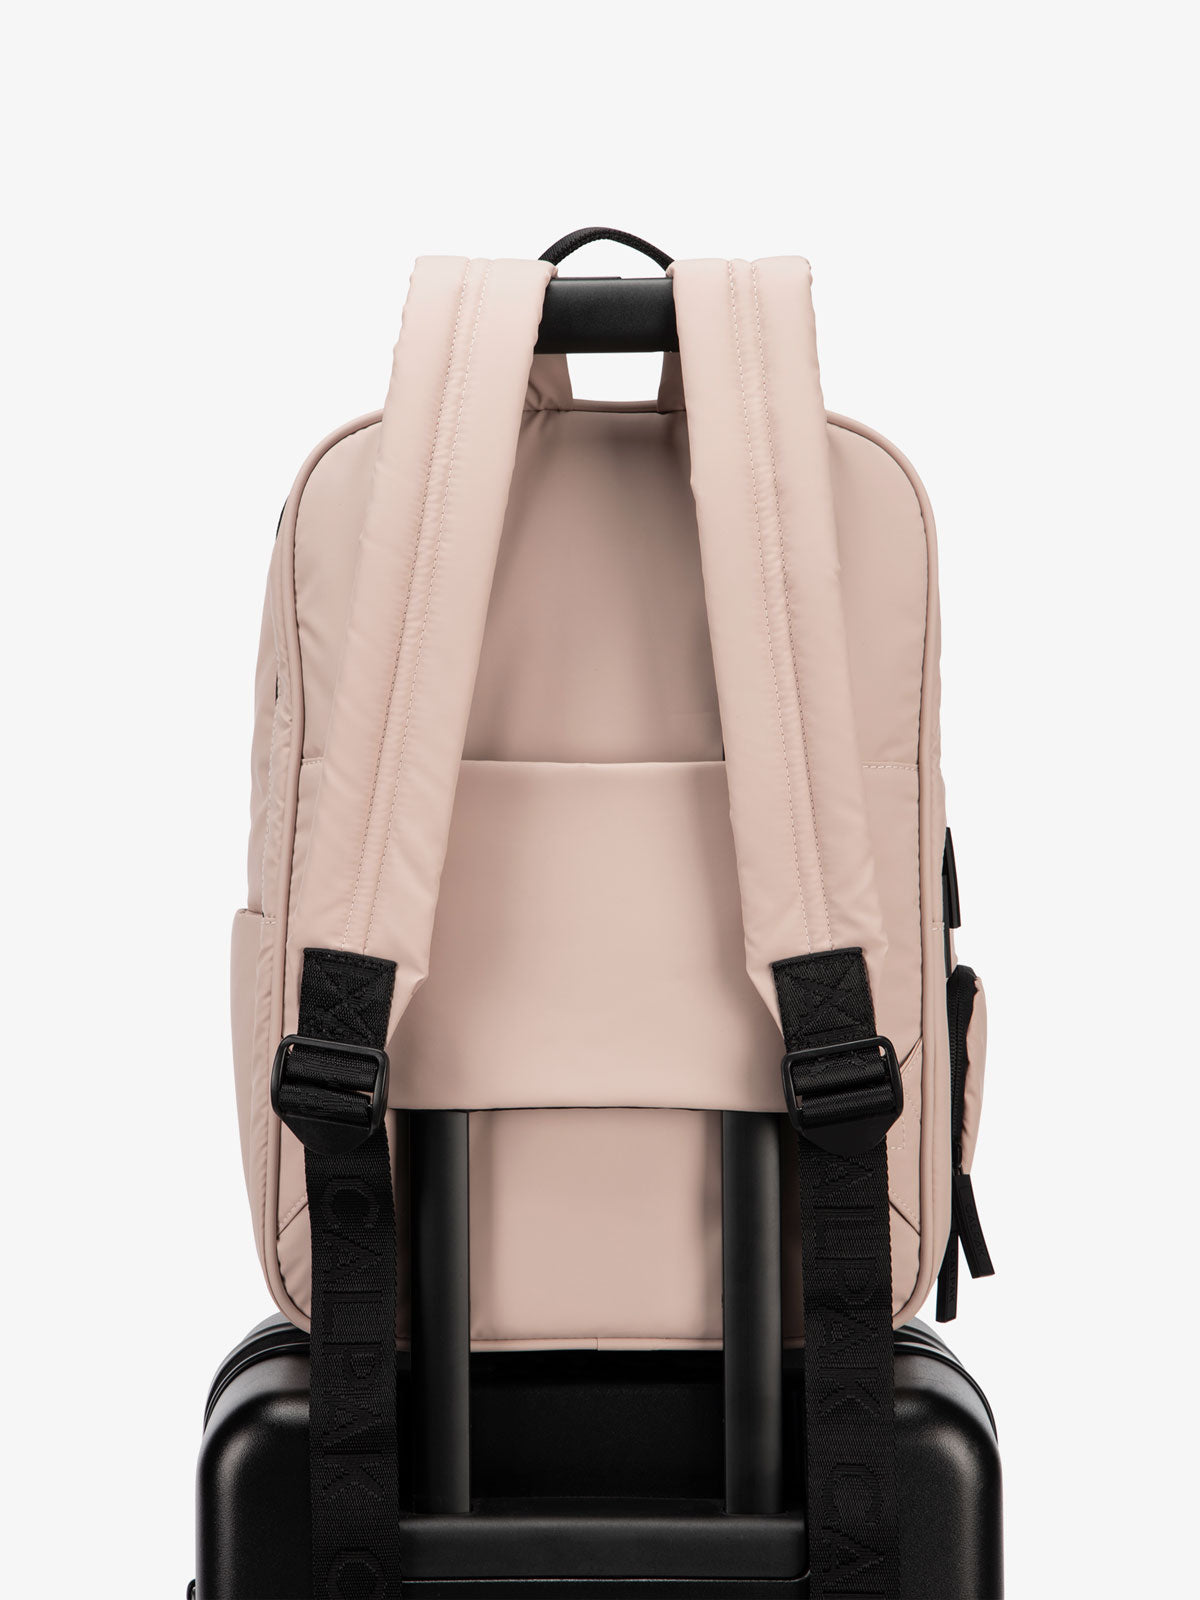 Backpack with luggage sleeve